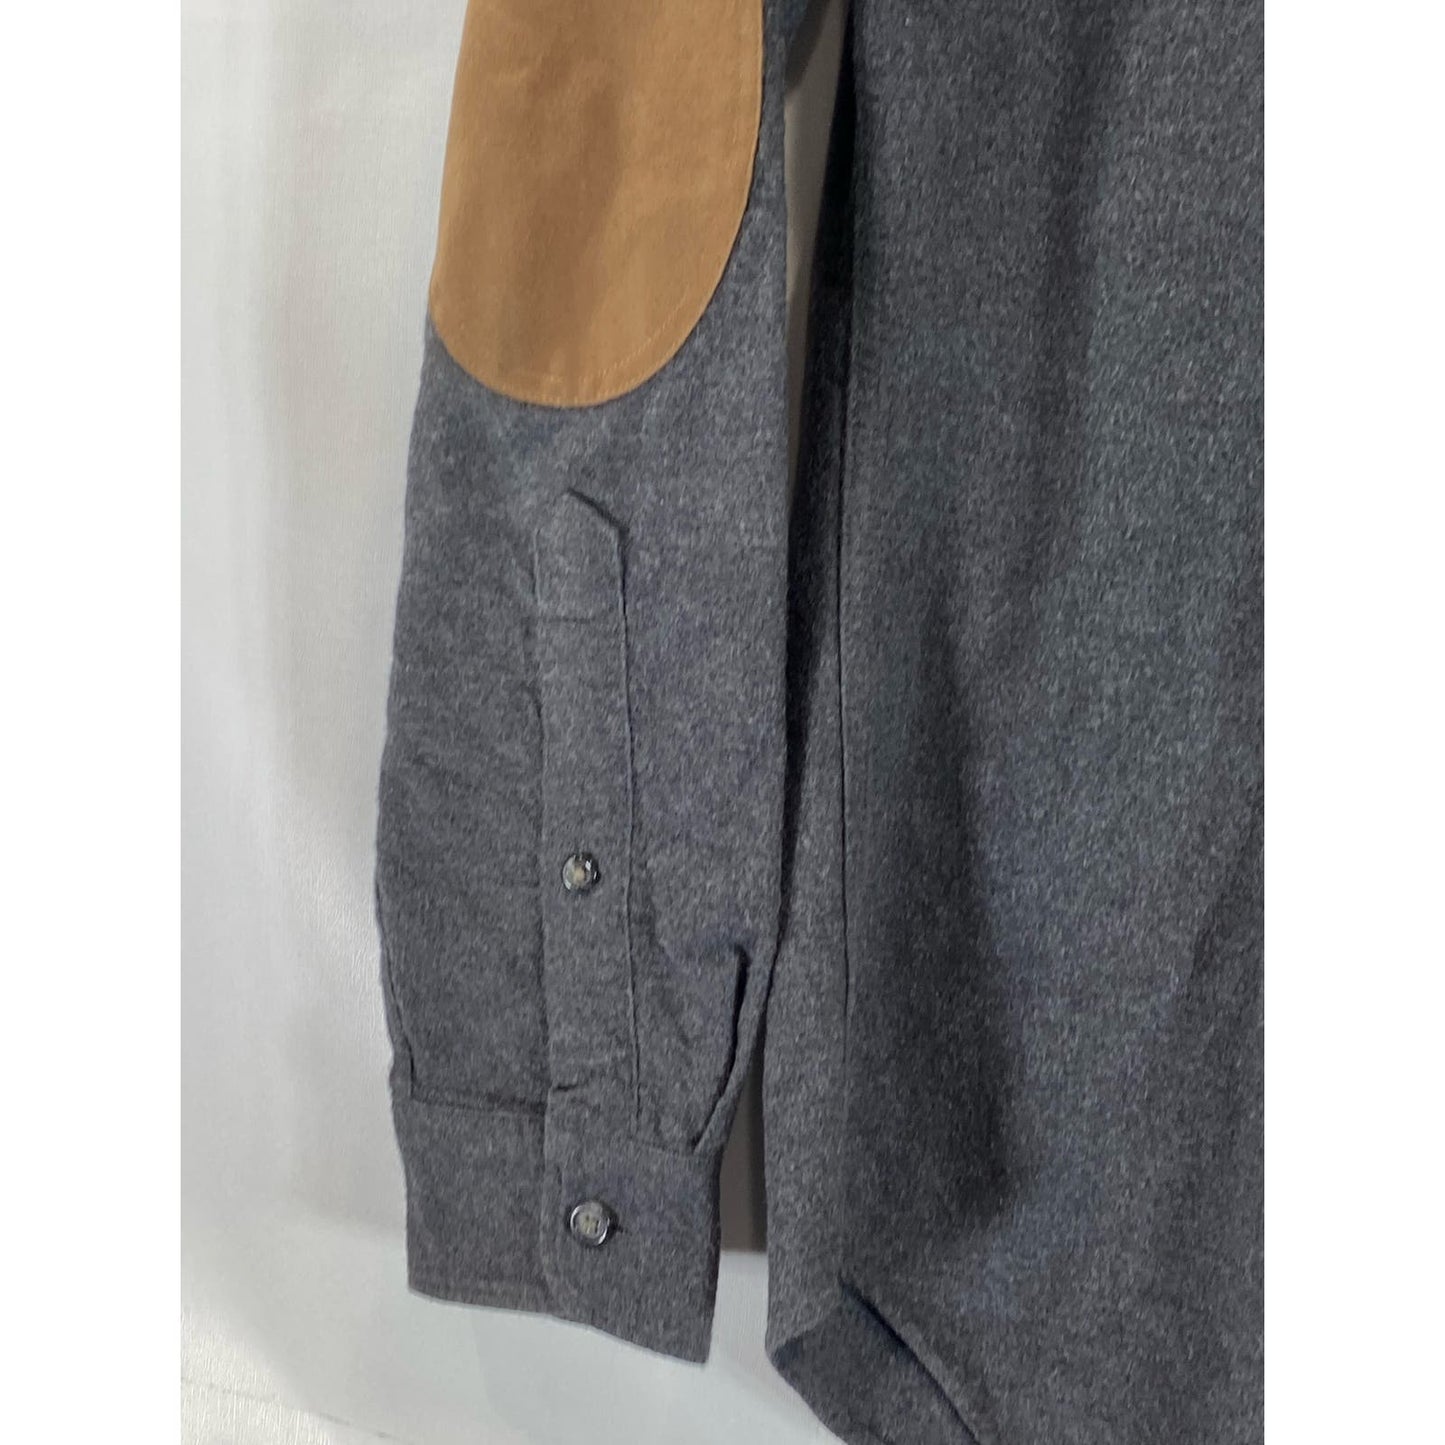 J. CREW Men's Charcoal Faux-Leather Elbow-Patch Button-Up Long Sleeve Shirt SZXS